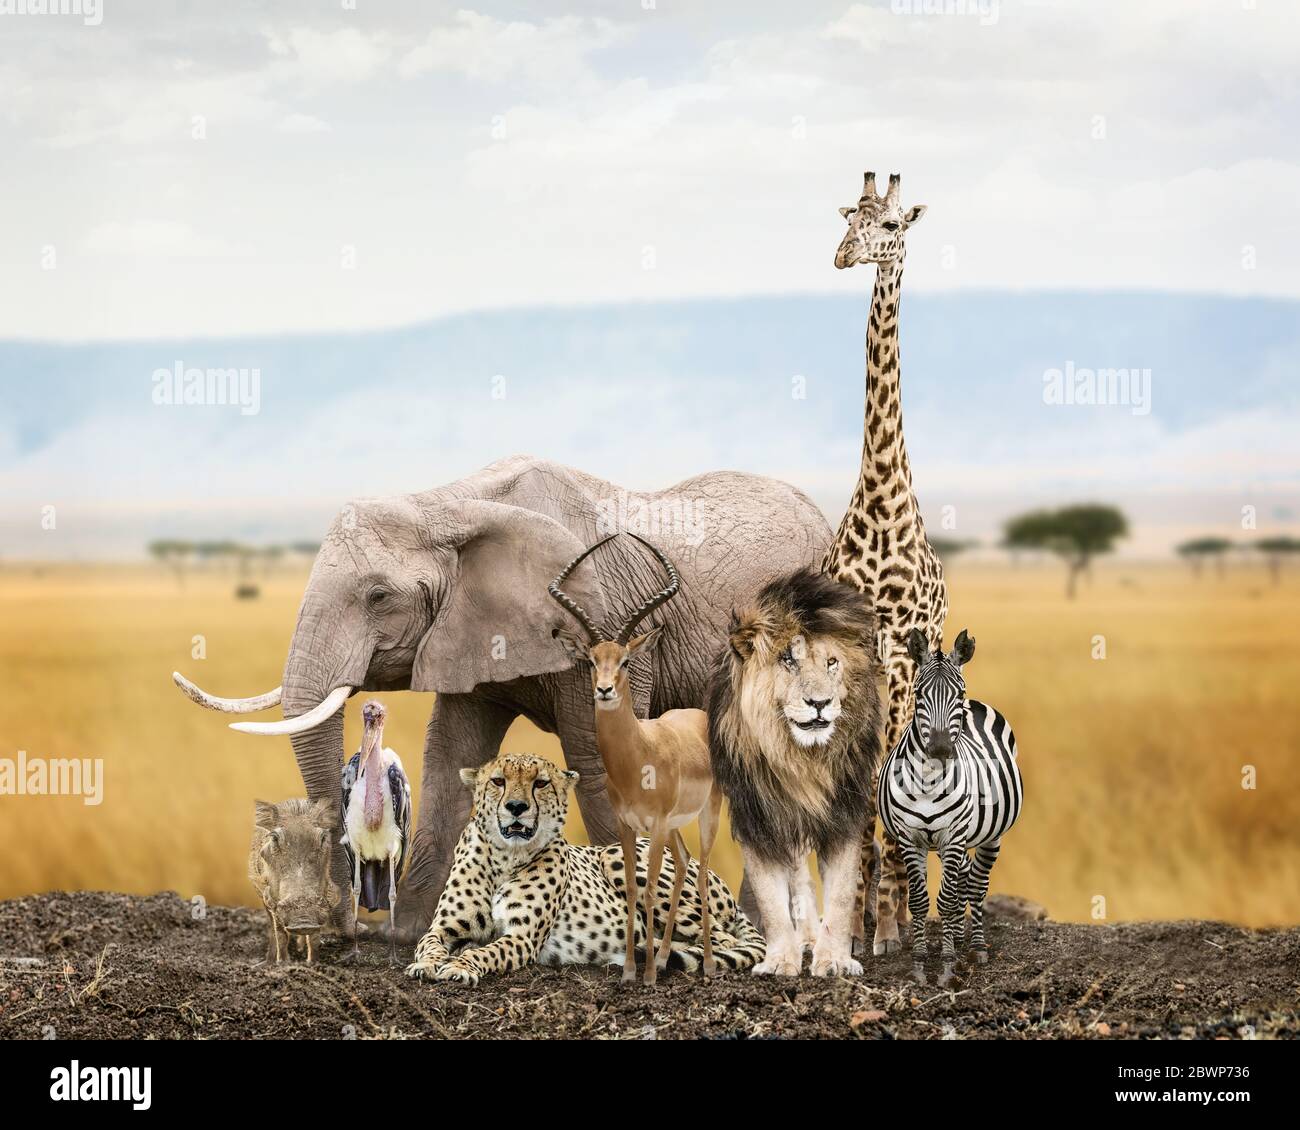 Large group of African safari wildlife animals together in Kenya grasslands Stock Photo